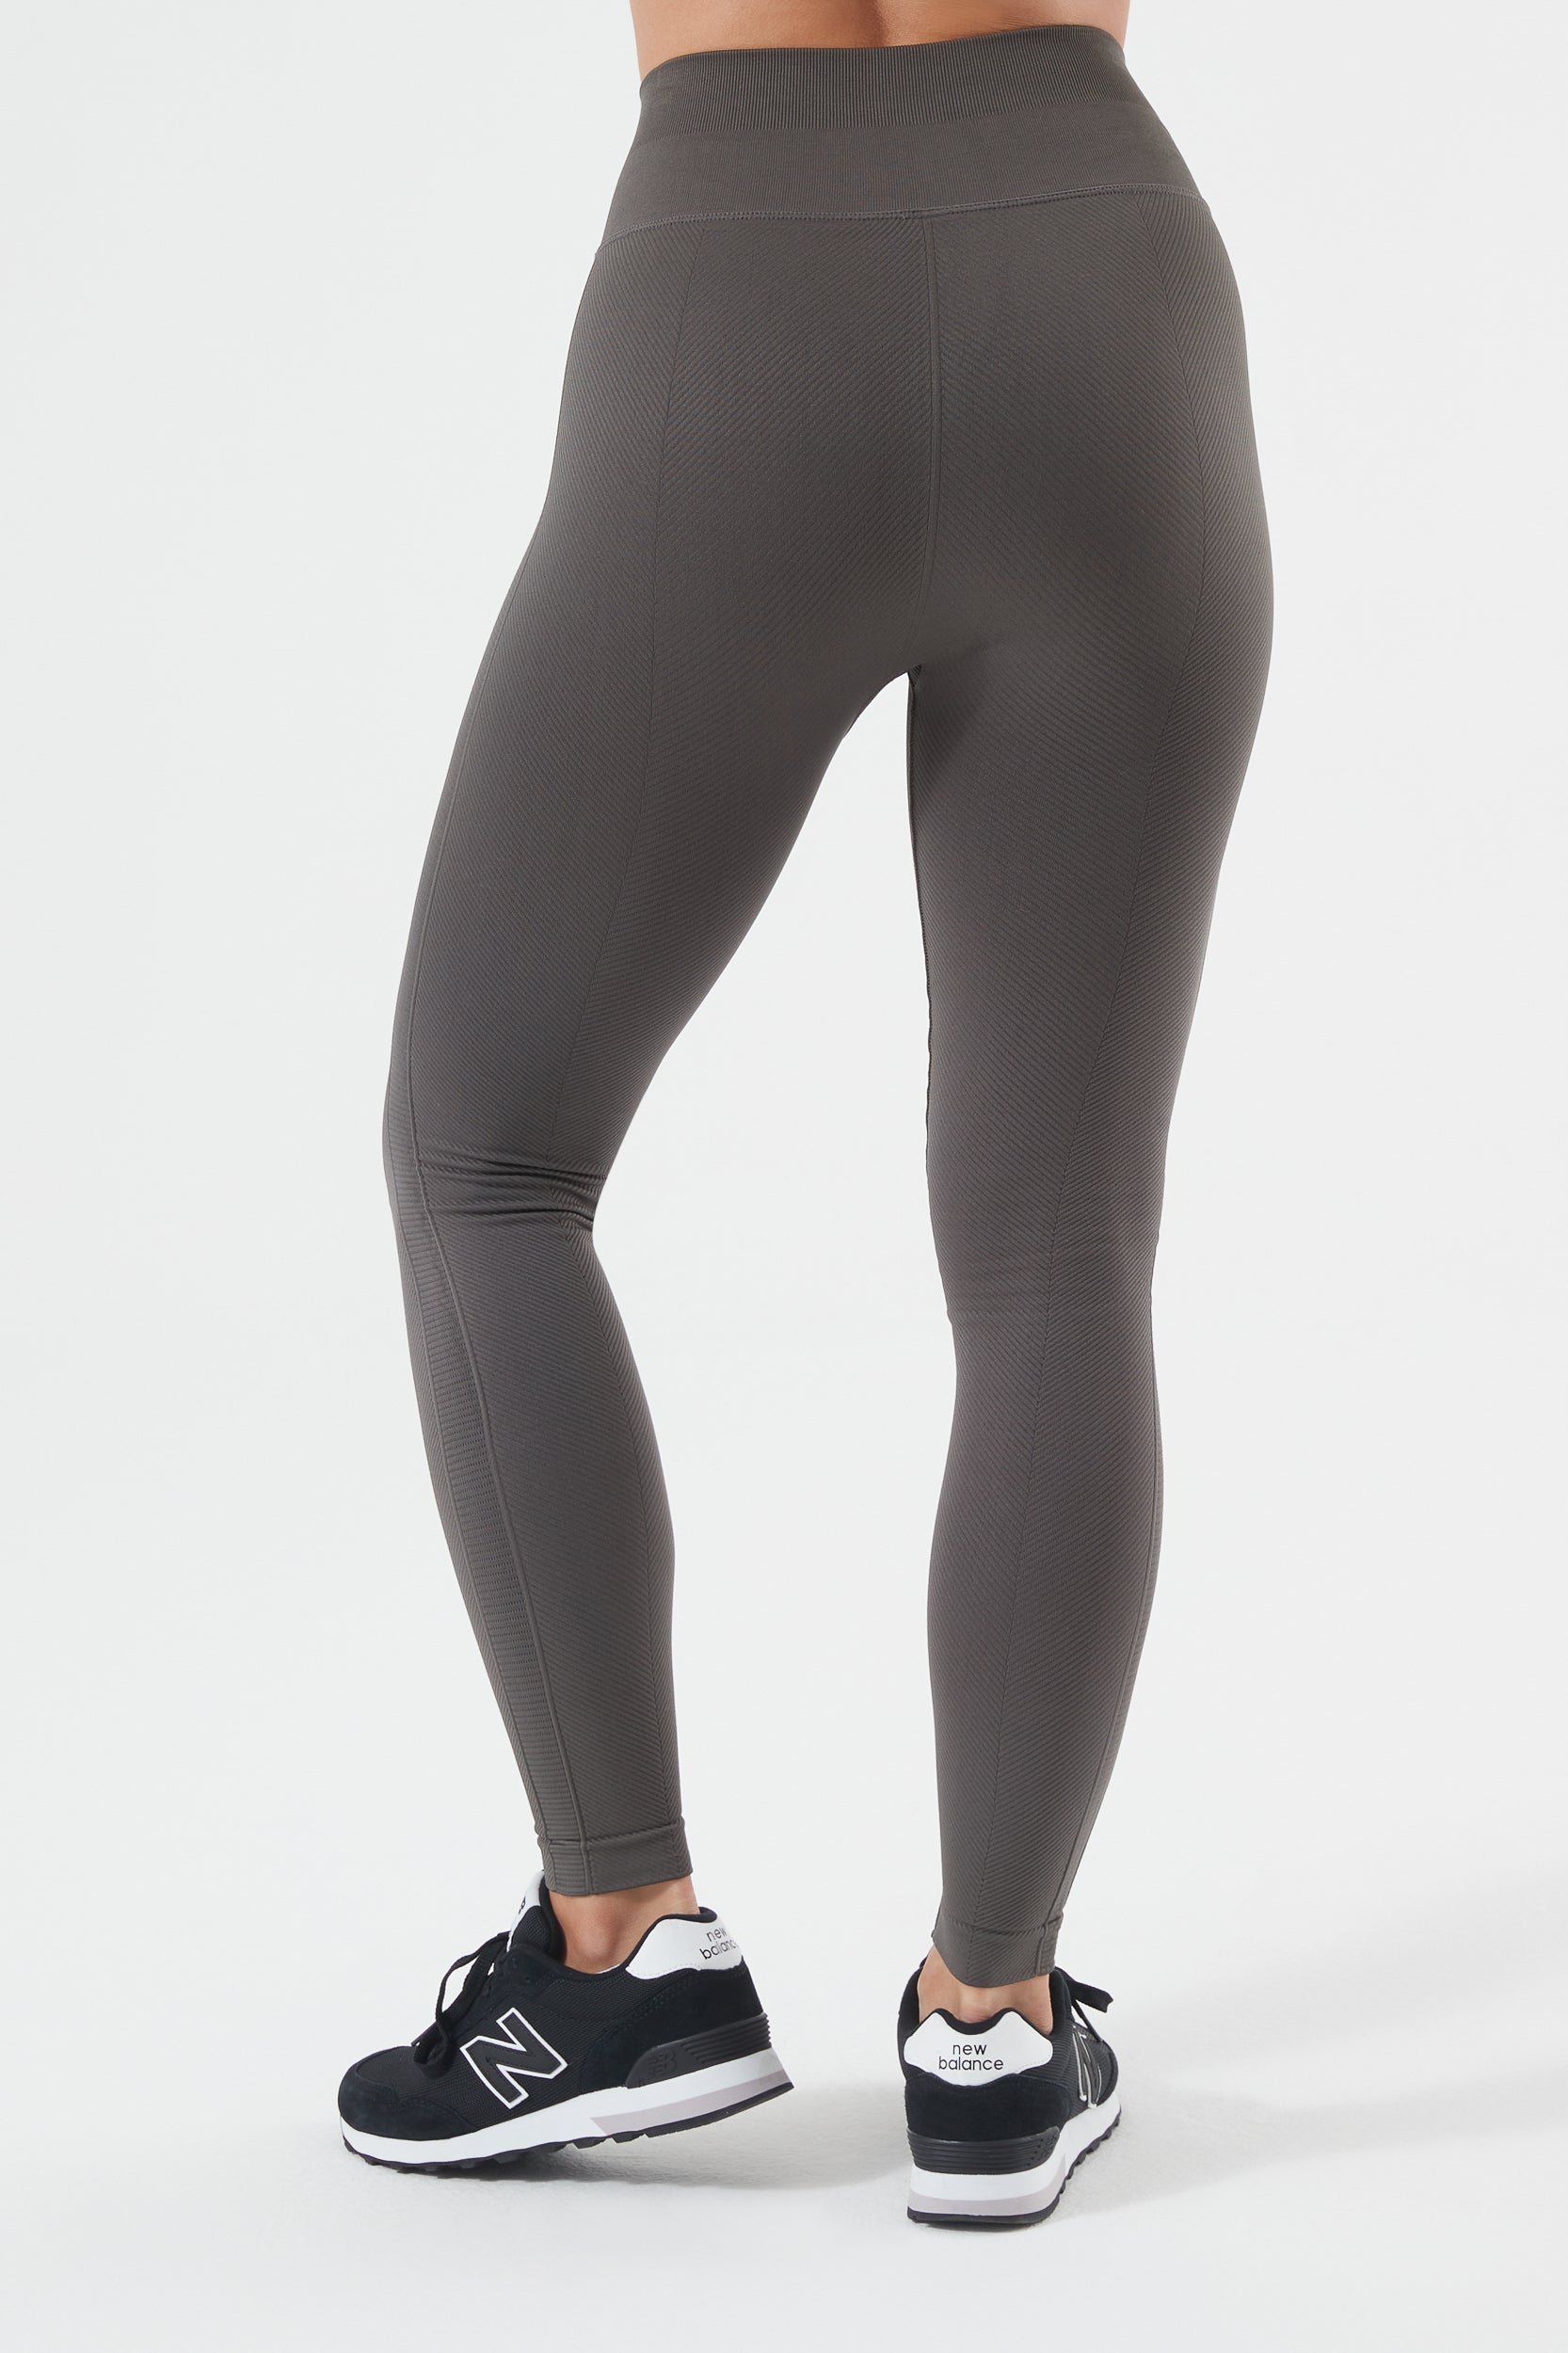 NUX Seamless workout Yoga gym Gray pattern Leggings Size medium Compression